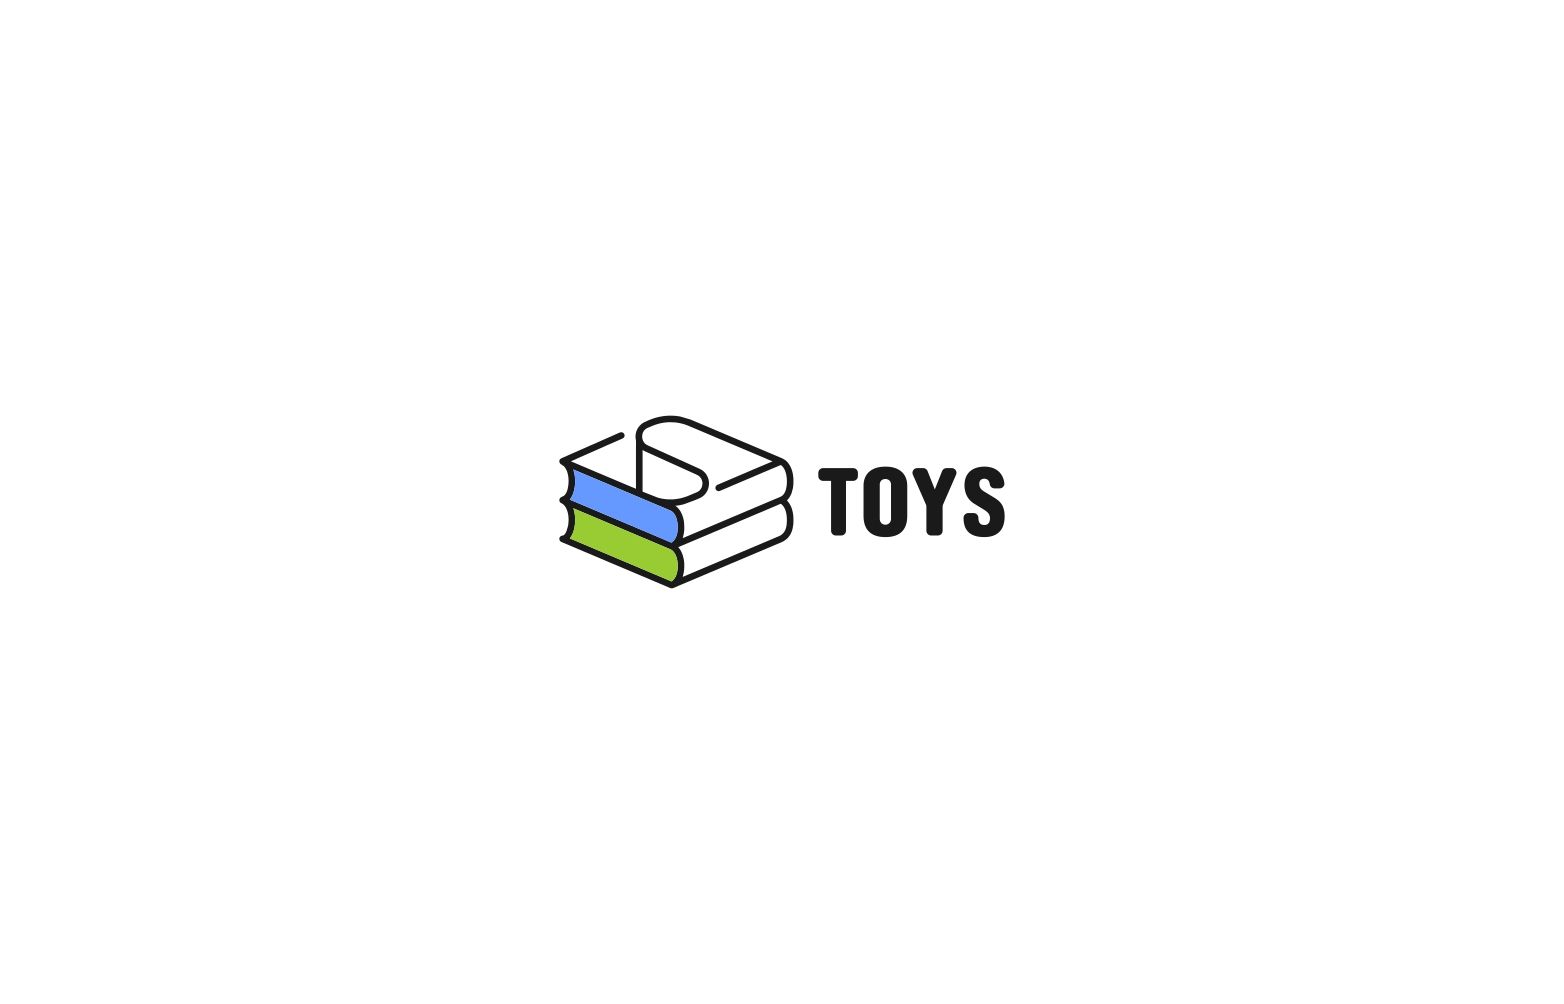 Логотип для BSB Toys (Be Smart Baby) - дизайнер sharipovslv